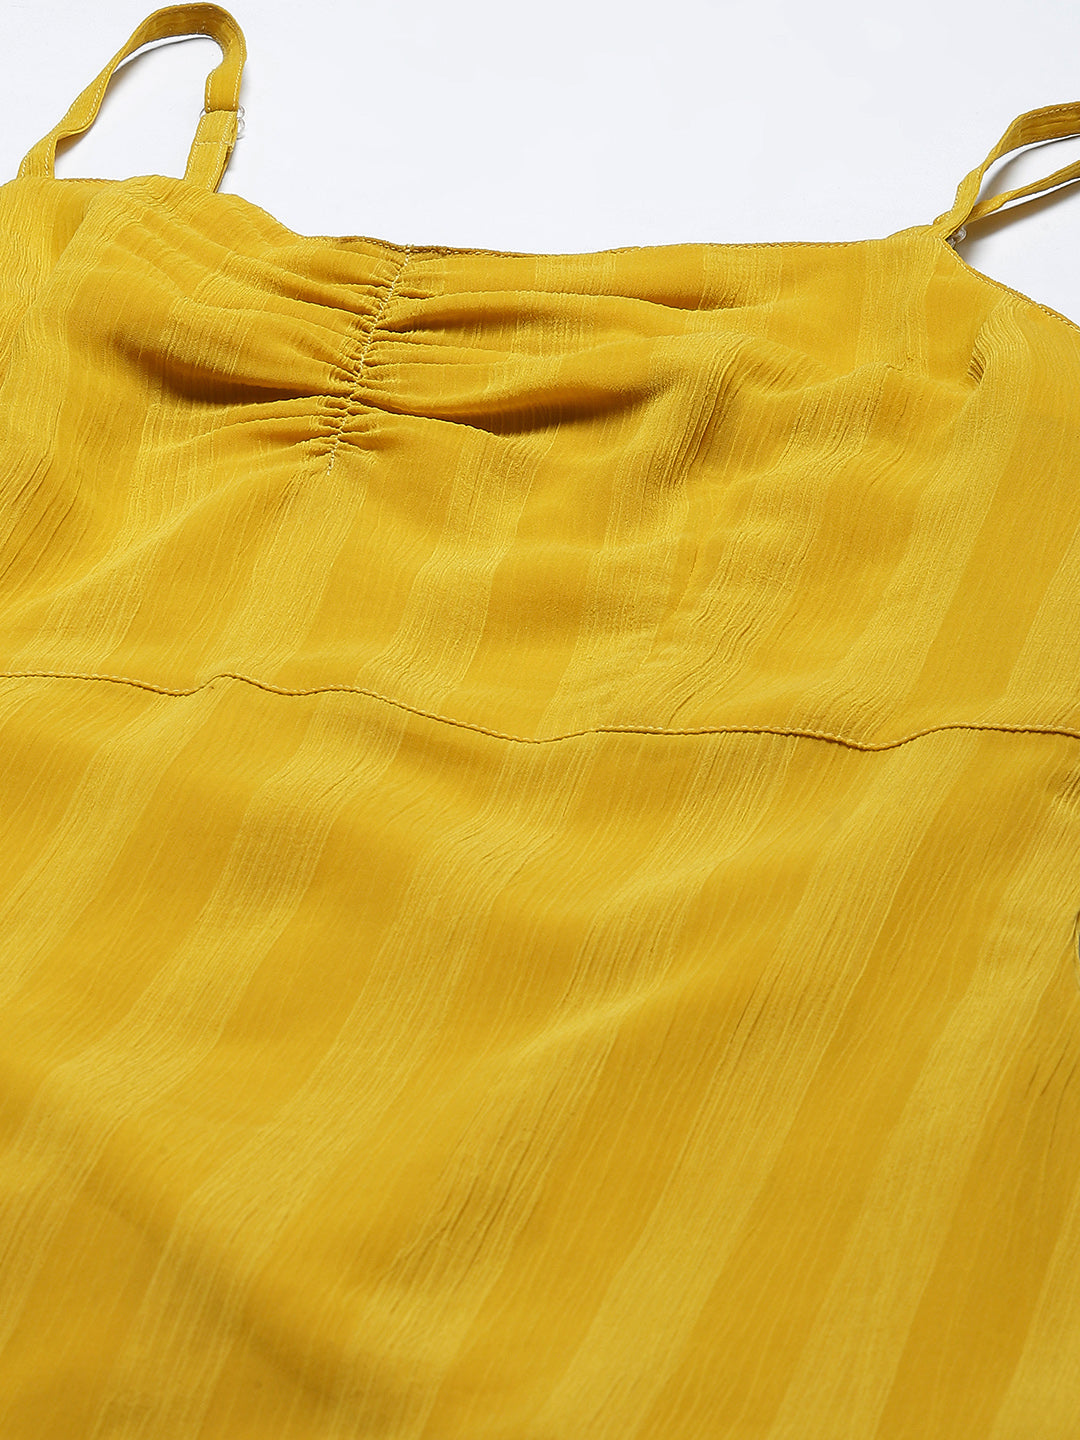 A Yellow Agastya Chiffon Strap Dress With Font Gathers And Flared Hem